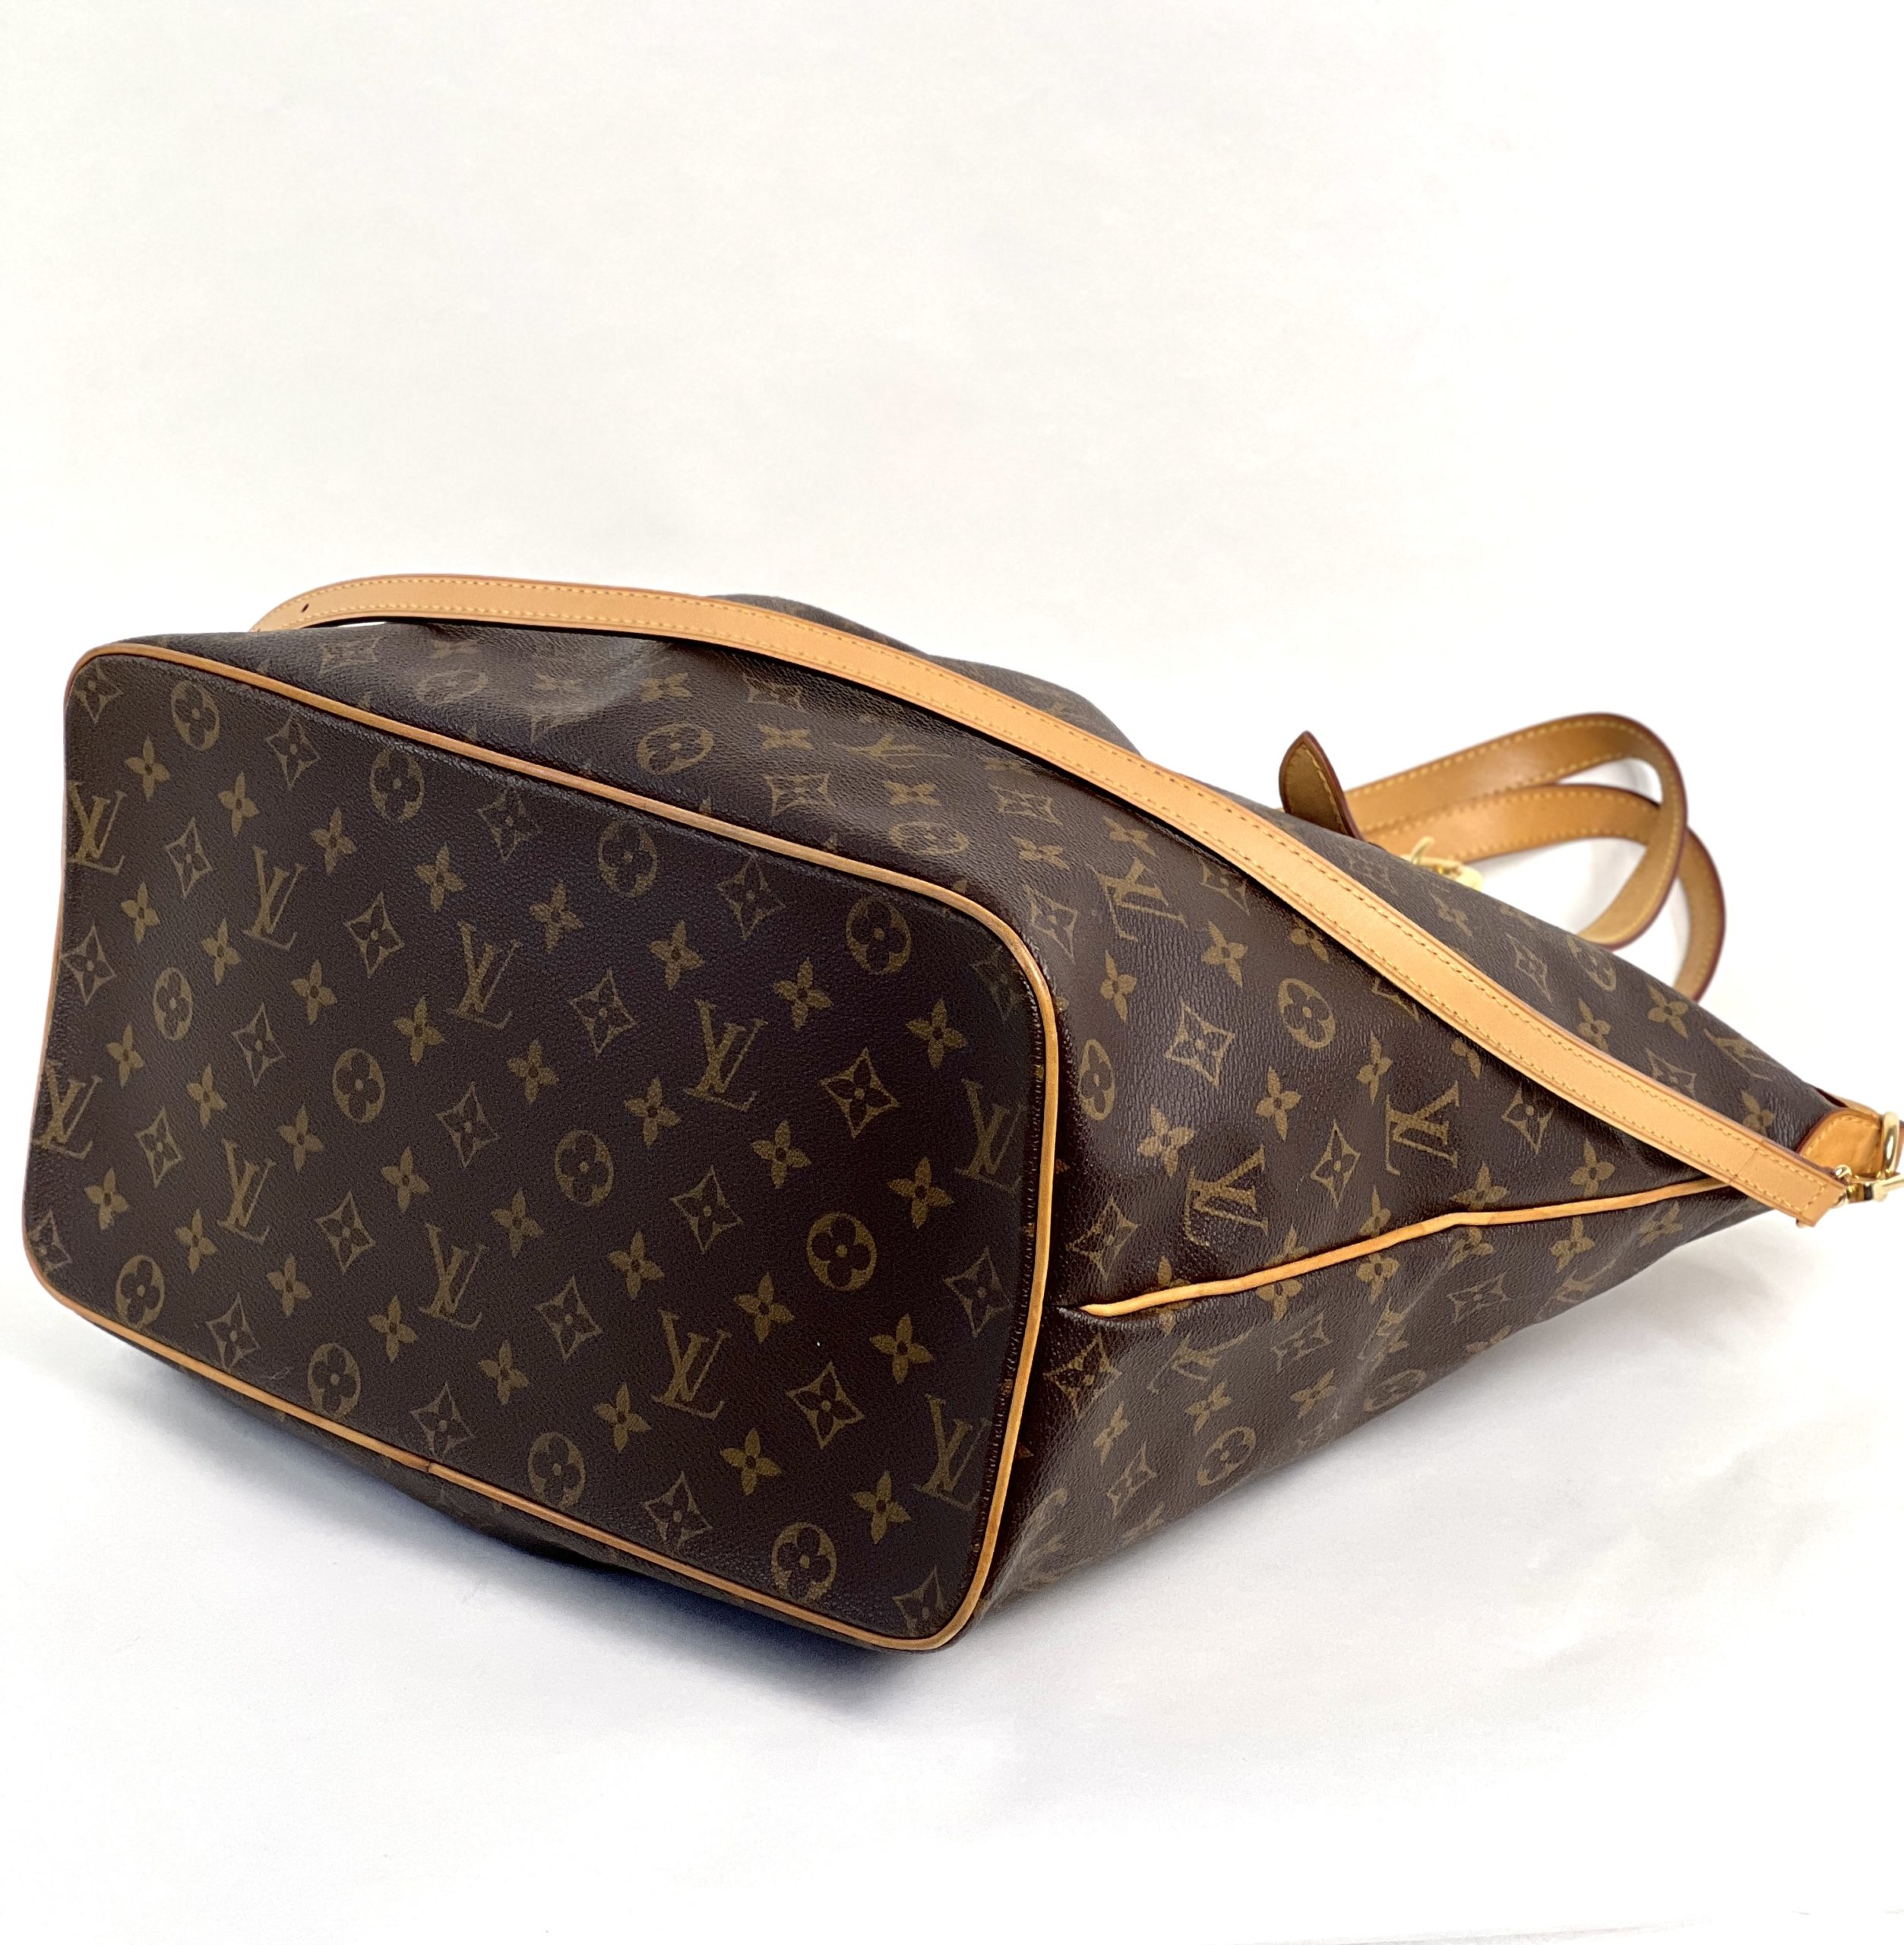 How to Spot Authentic Louis Vuitton Babylone GM Monogram Bag 